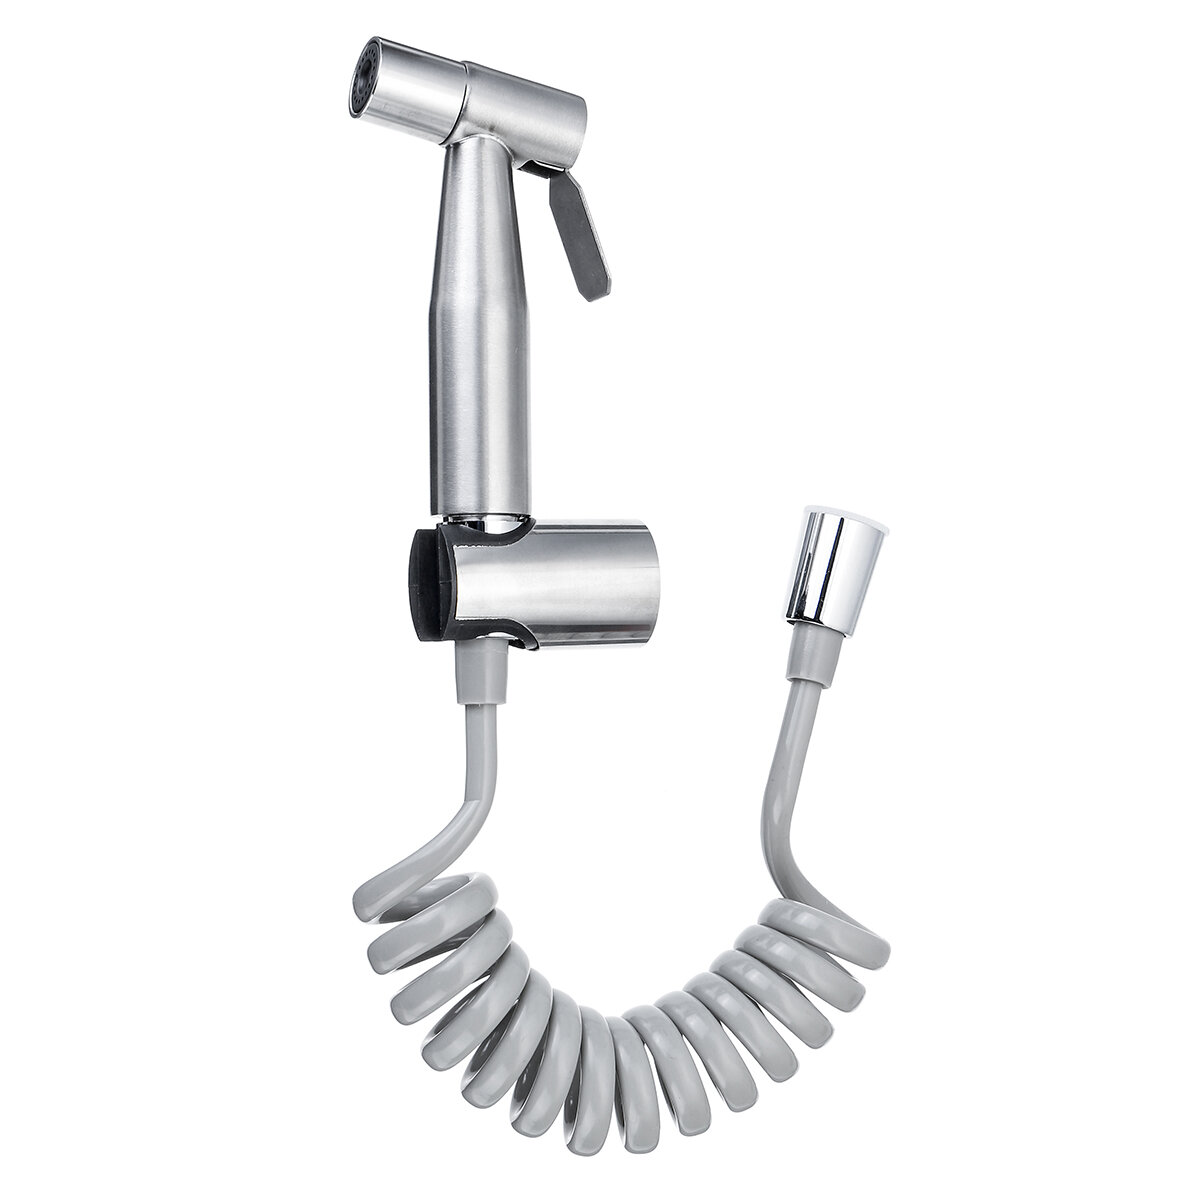 Toilet Bidet Sprayer Stainless Steel Hand Held Shattaf Bathroom Shower Head 1.5M/2M Hose, Banggood  - buy with discount